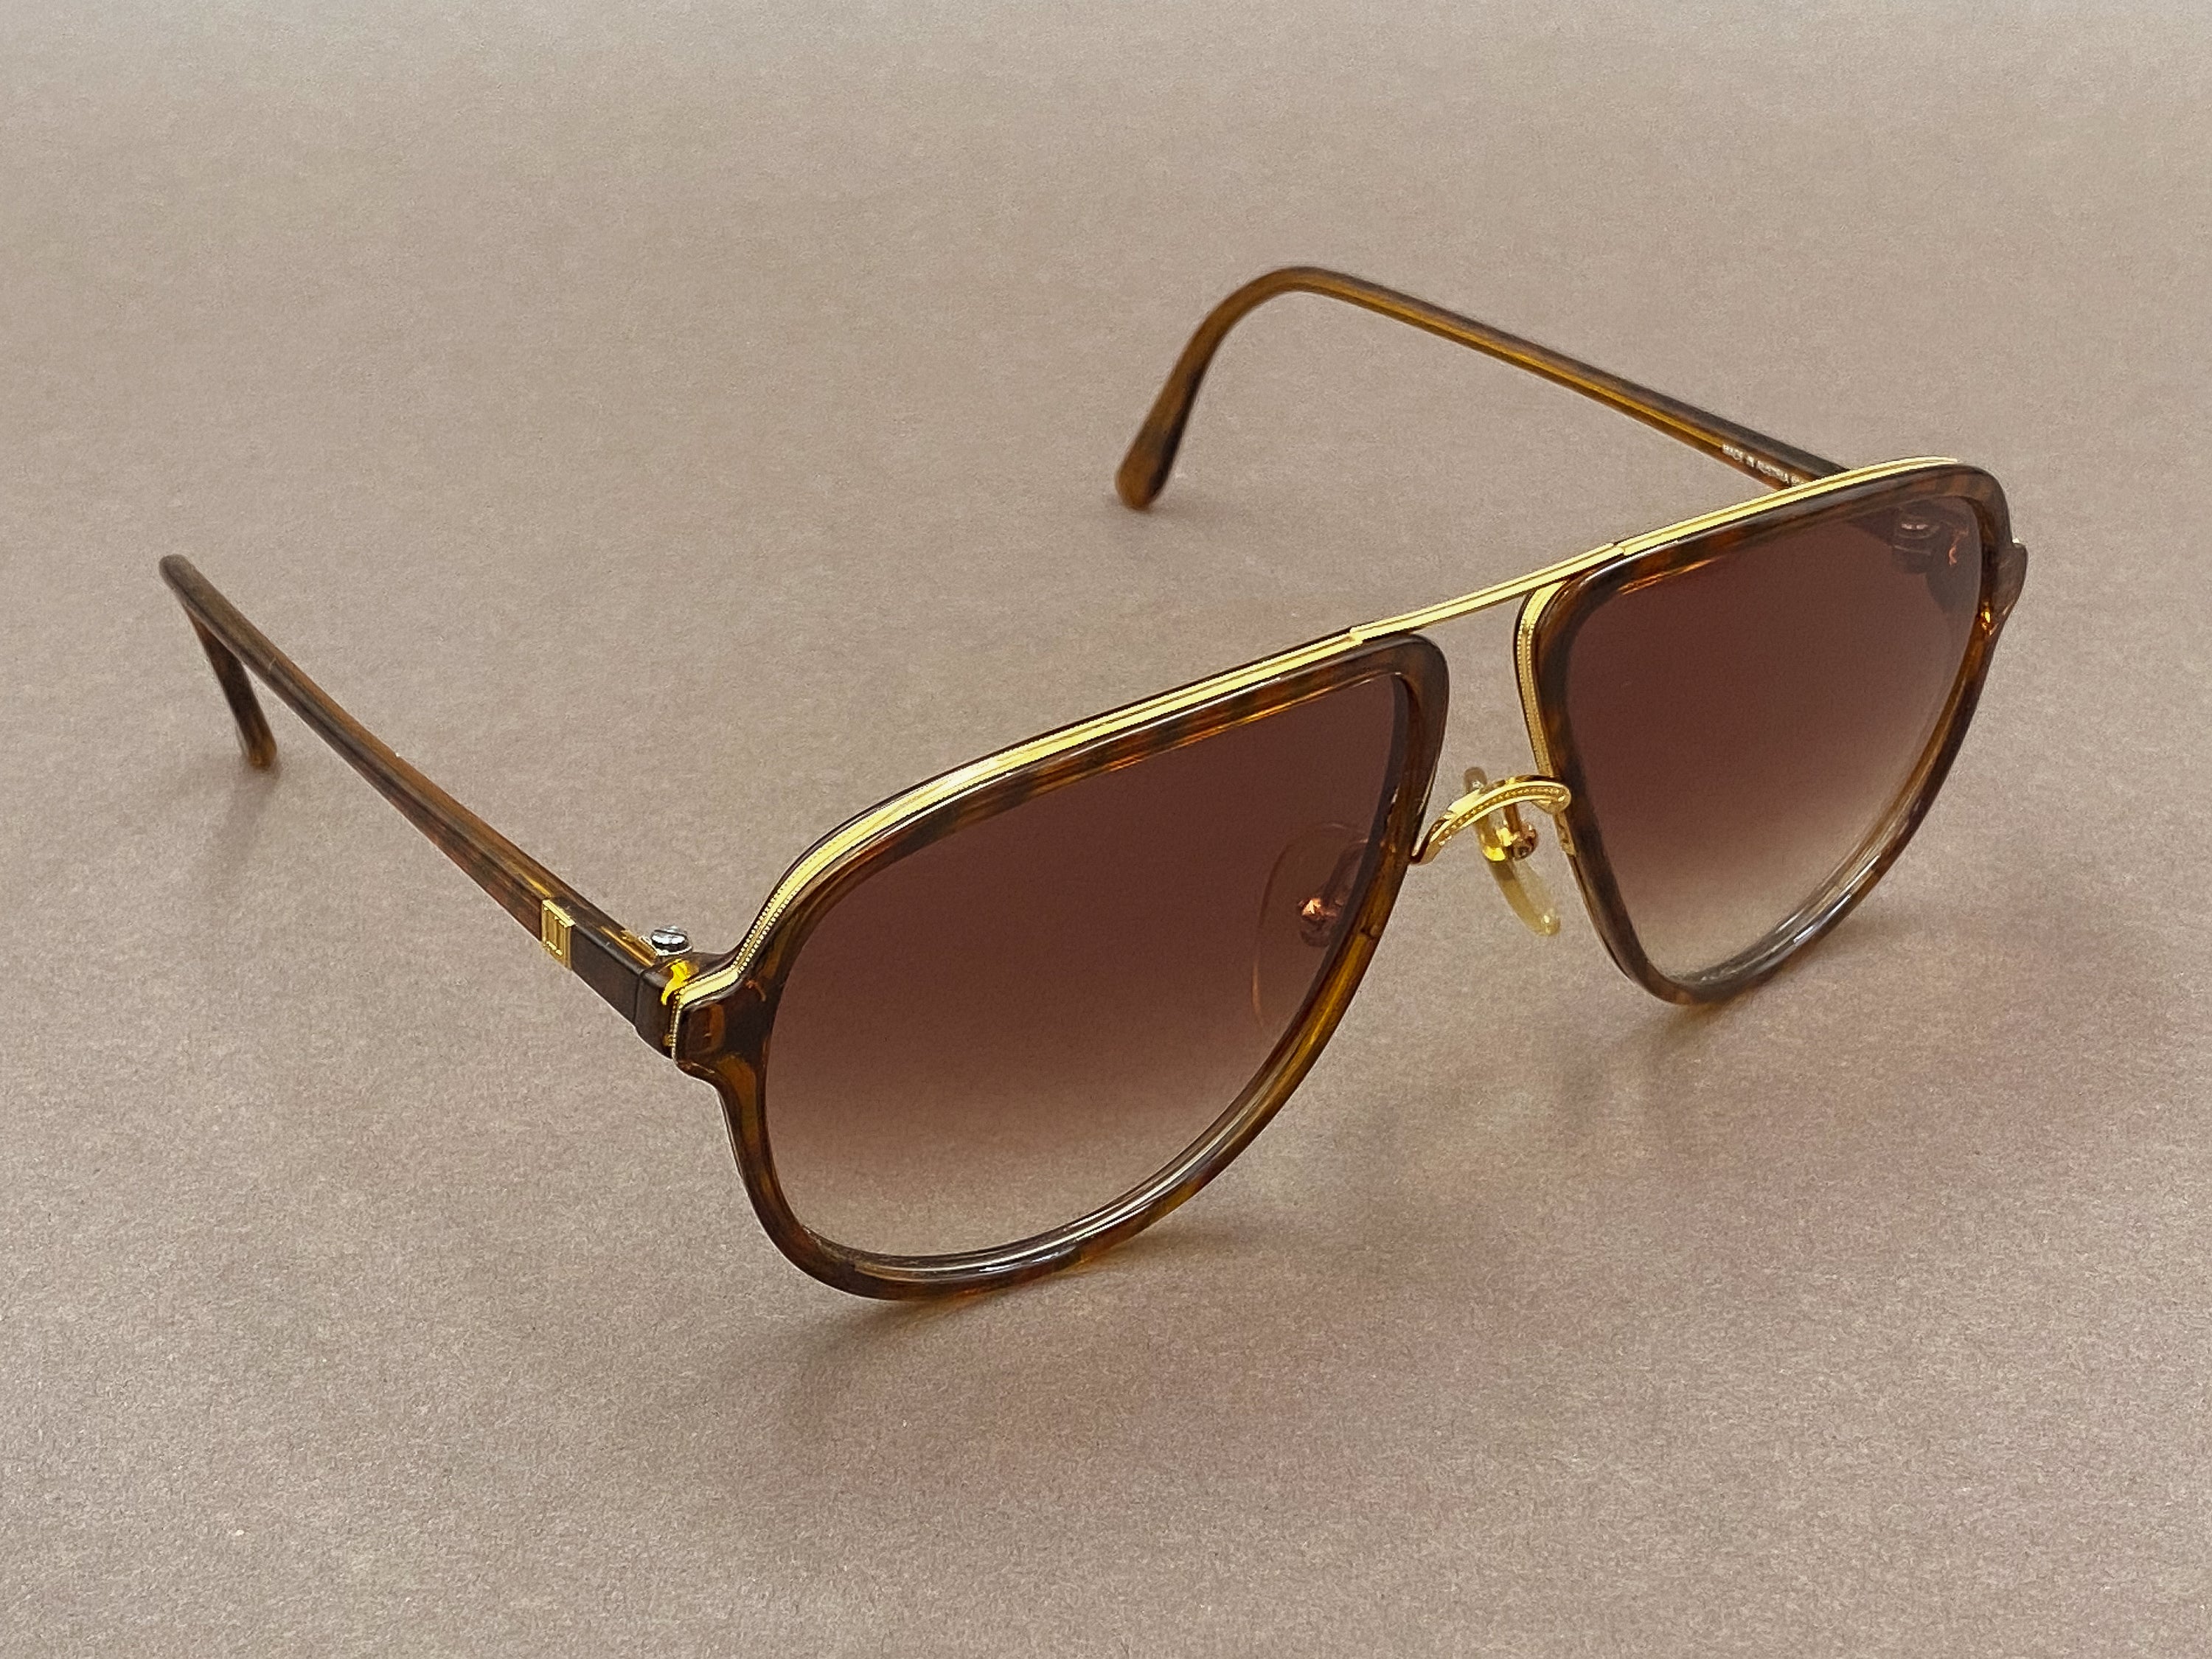 Dunhill 6058 gentlemans sunglasses